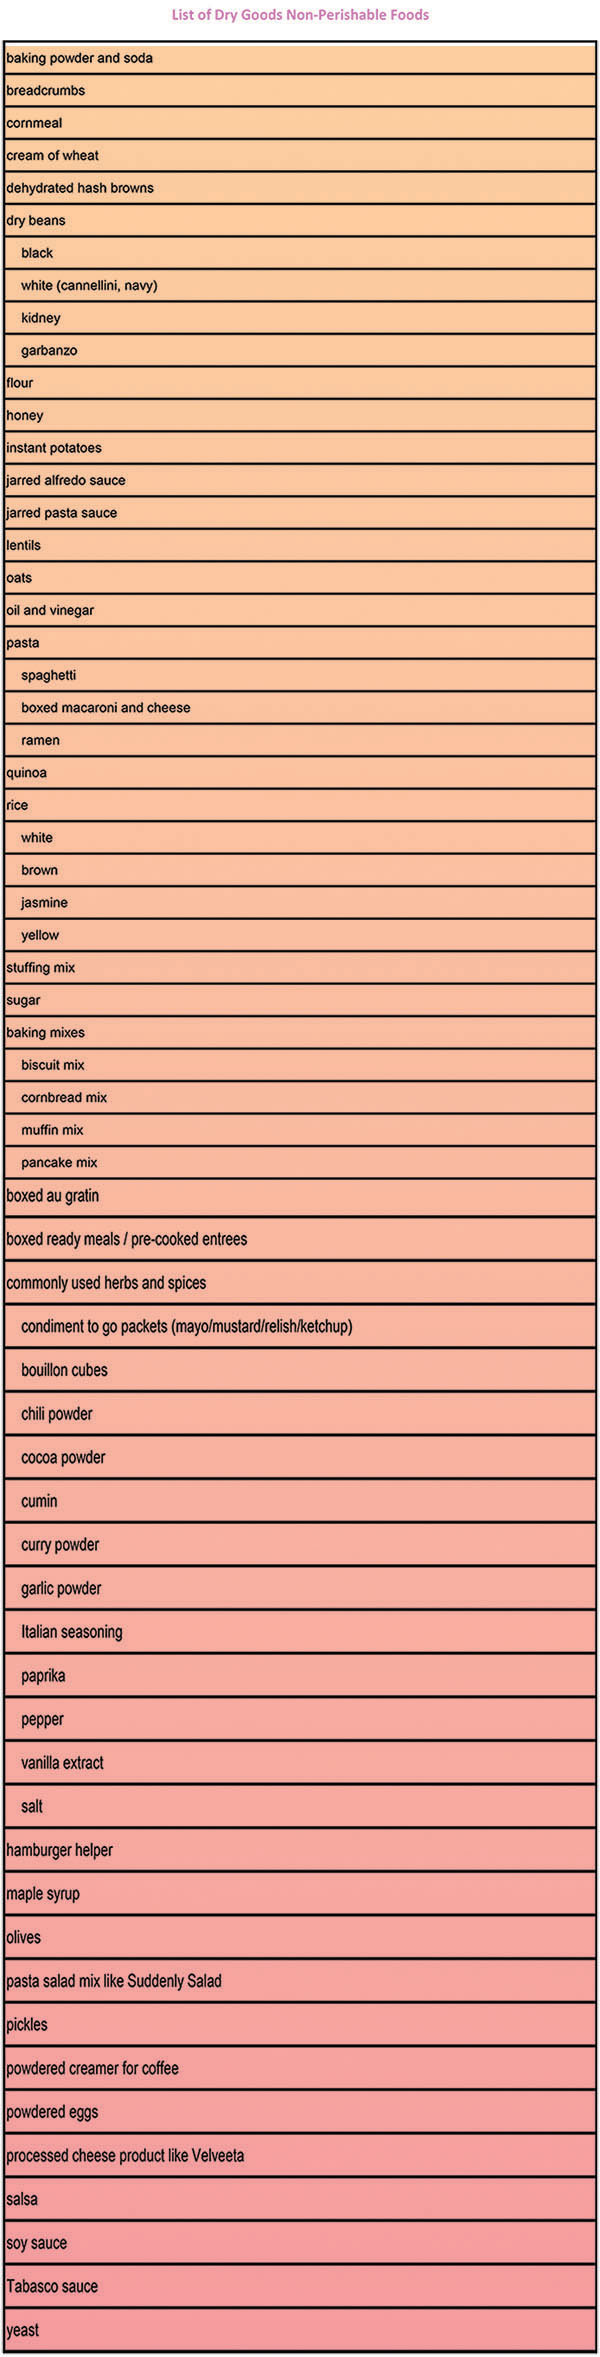 List Of Dry Goods Non Perishable Foods #non-perishable foods #foods #trendypins